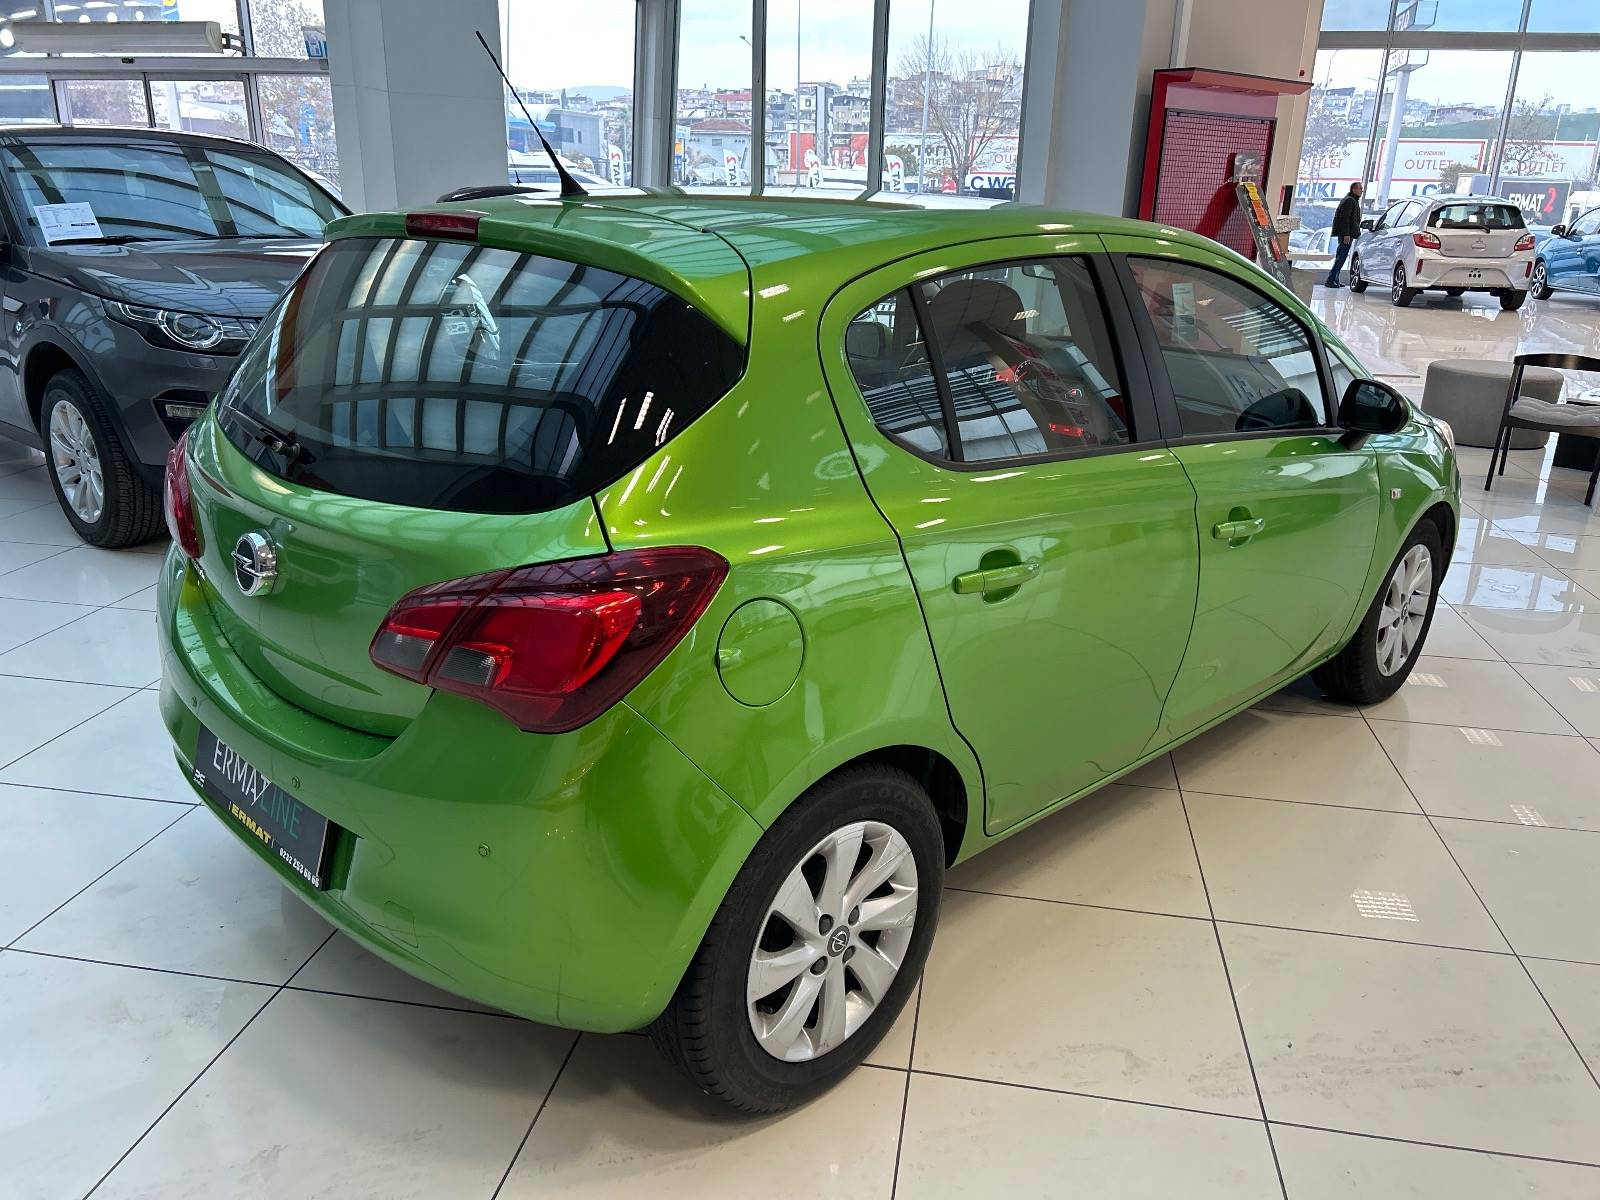 2015 Benzin + LPG Manuel Opel Corsa Yeşil Ermat 2.El